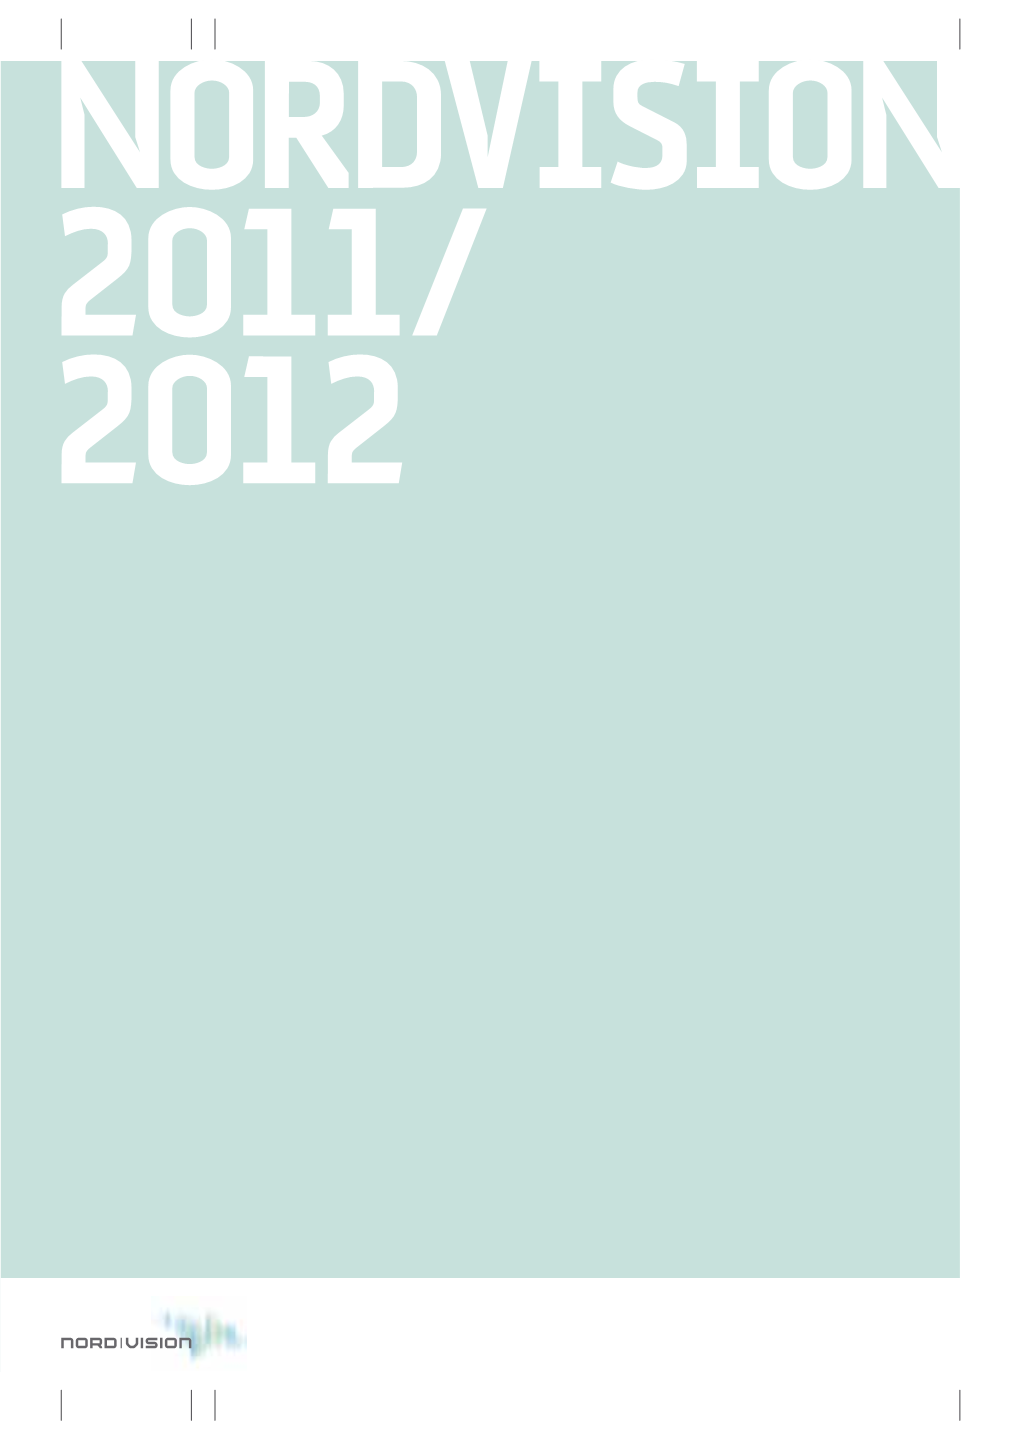 Nordvision 2011/ 2012 Nordvision 2011/ 2012